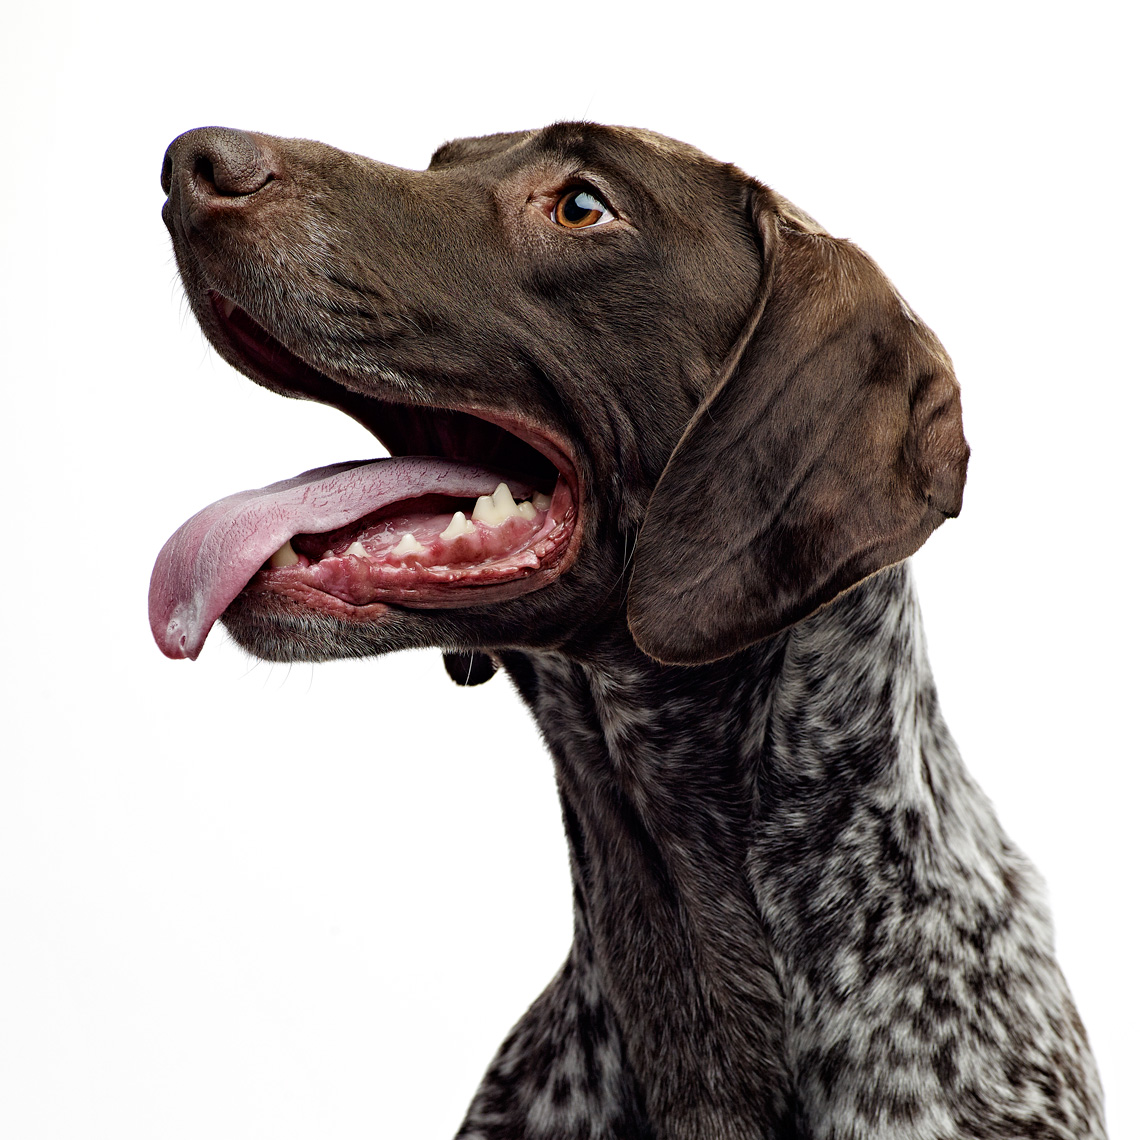 Dog portrait photography by Vancouver portrait photographer Waldy Martens